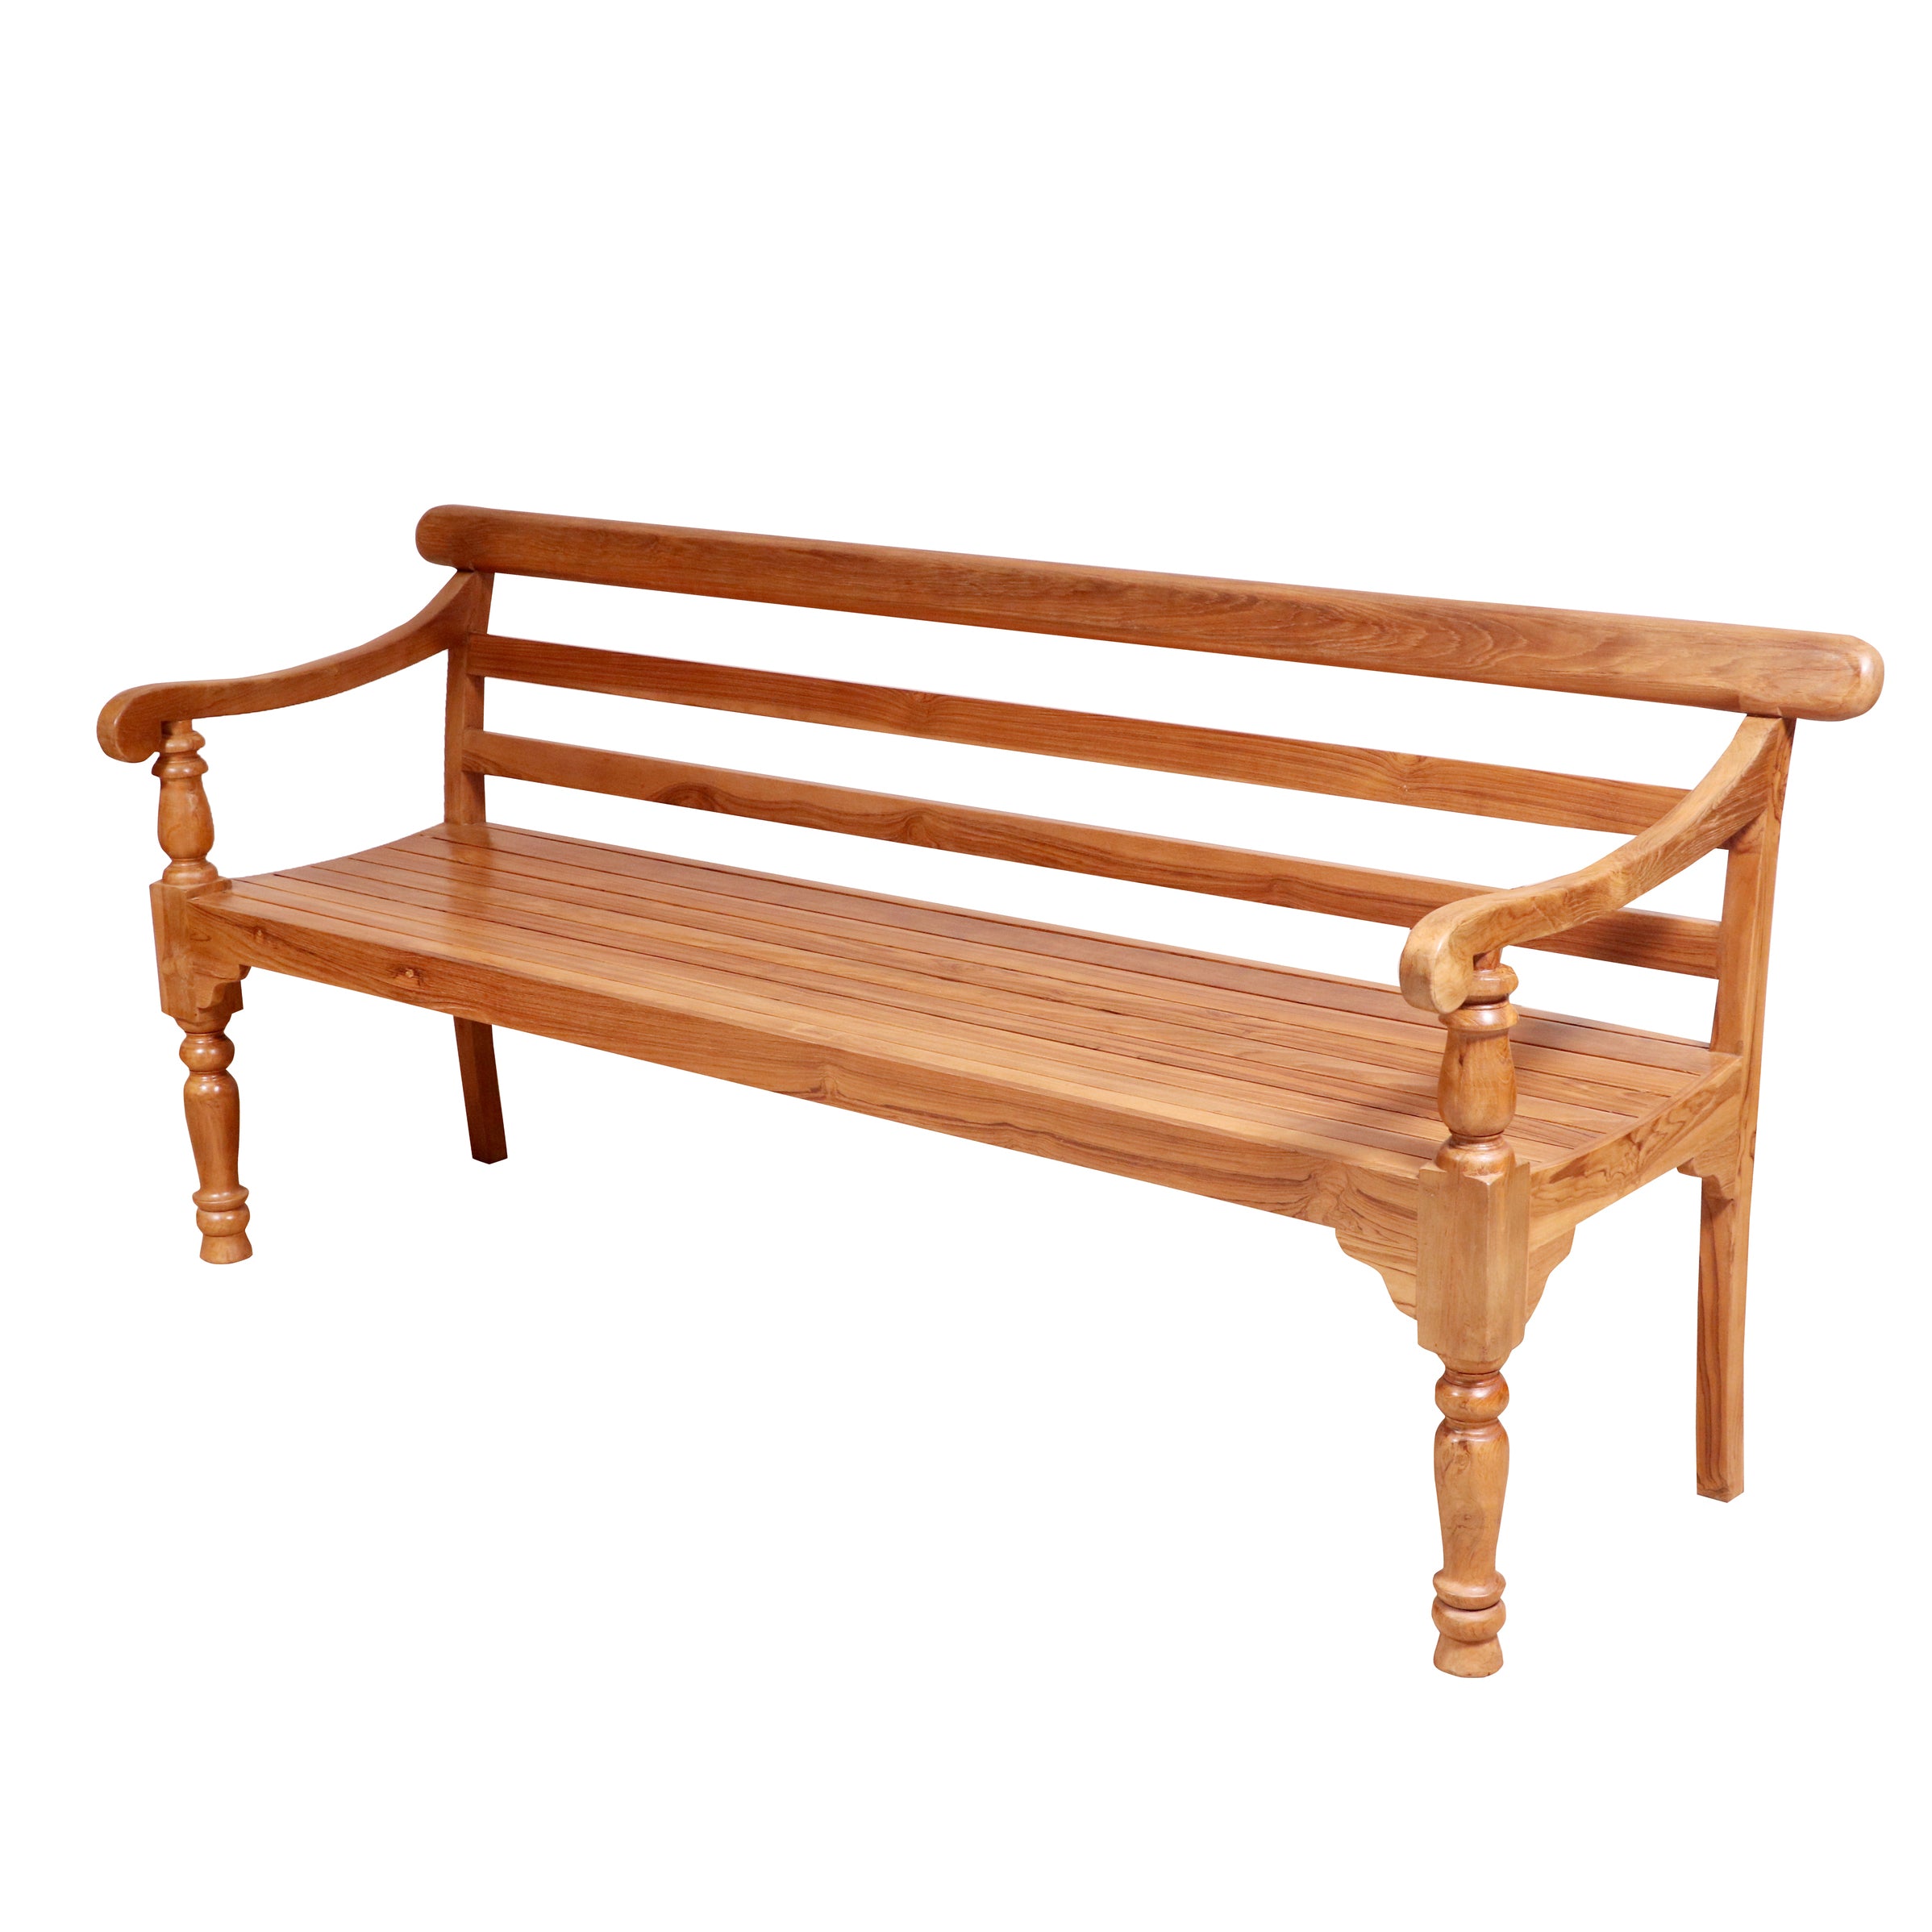 Antique Long Teak Finish Handcrafted Wooden Bench for Home Teak wood Bench